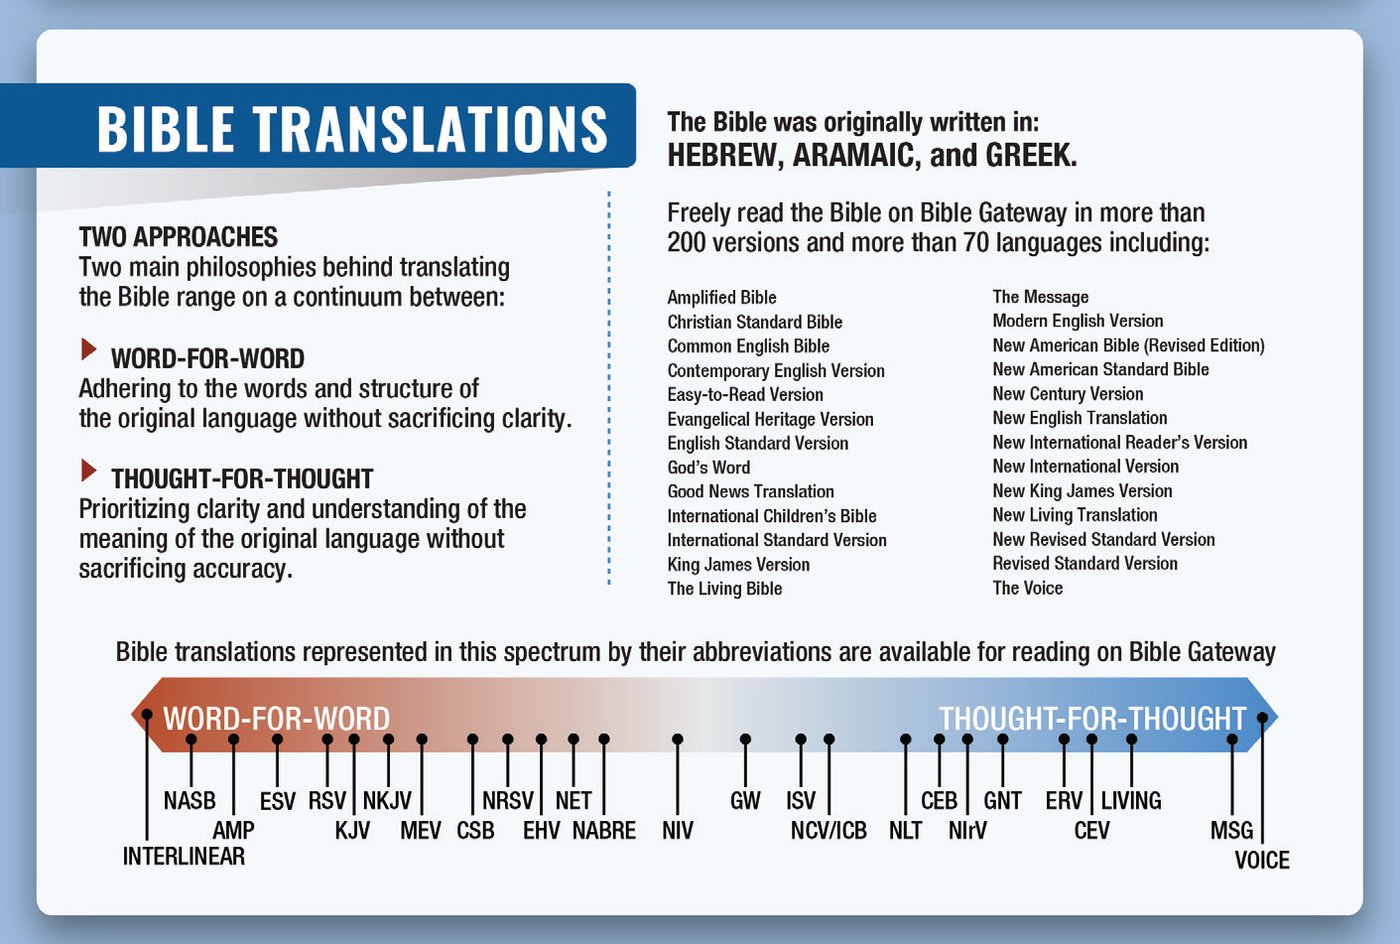 Comparison of Bible Translations